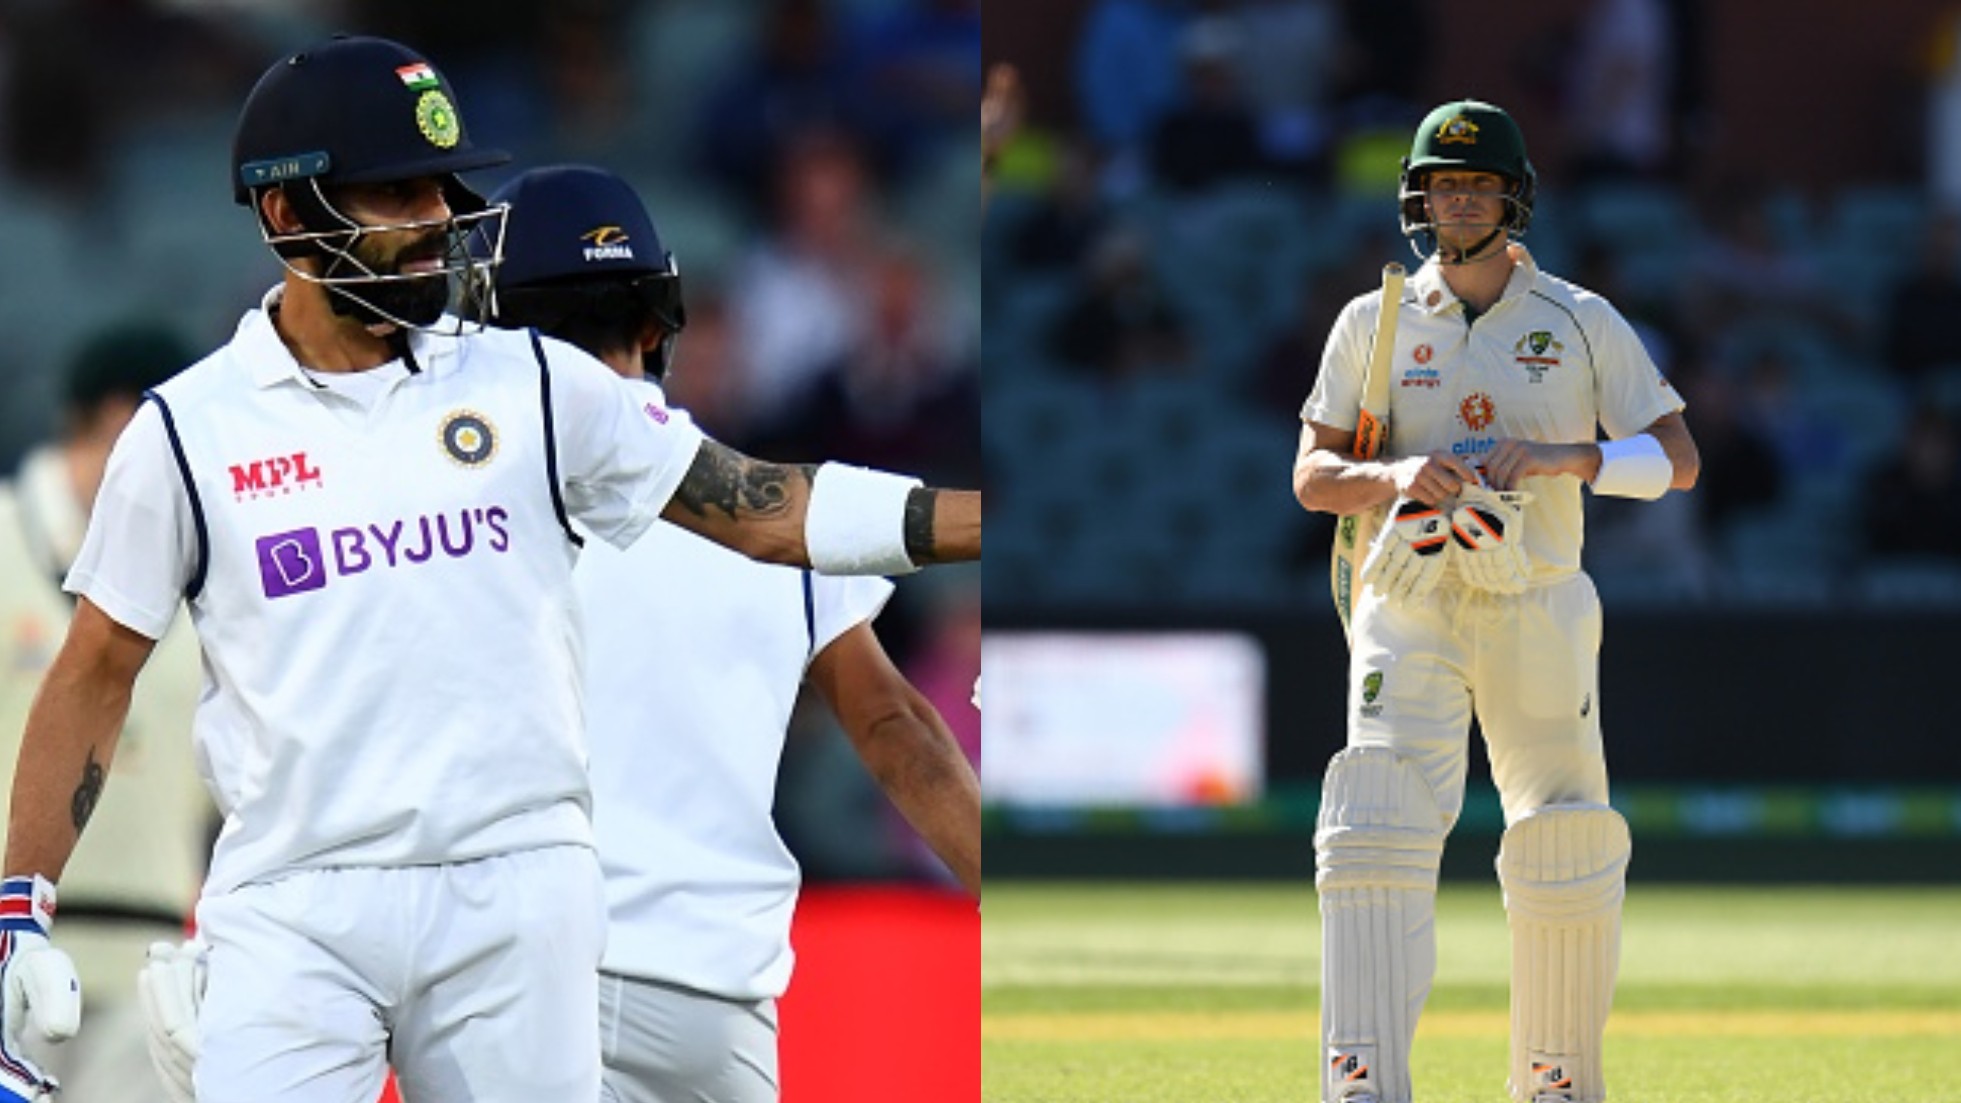 AUS v IND 2020-21: Virat Kohli reduces gap on Steve Smith in latest ICC Test batsman rankings